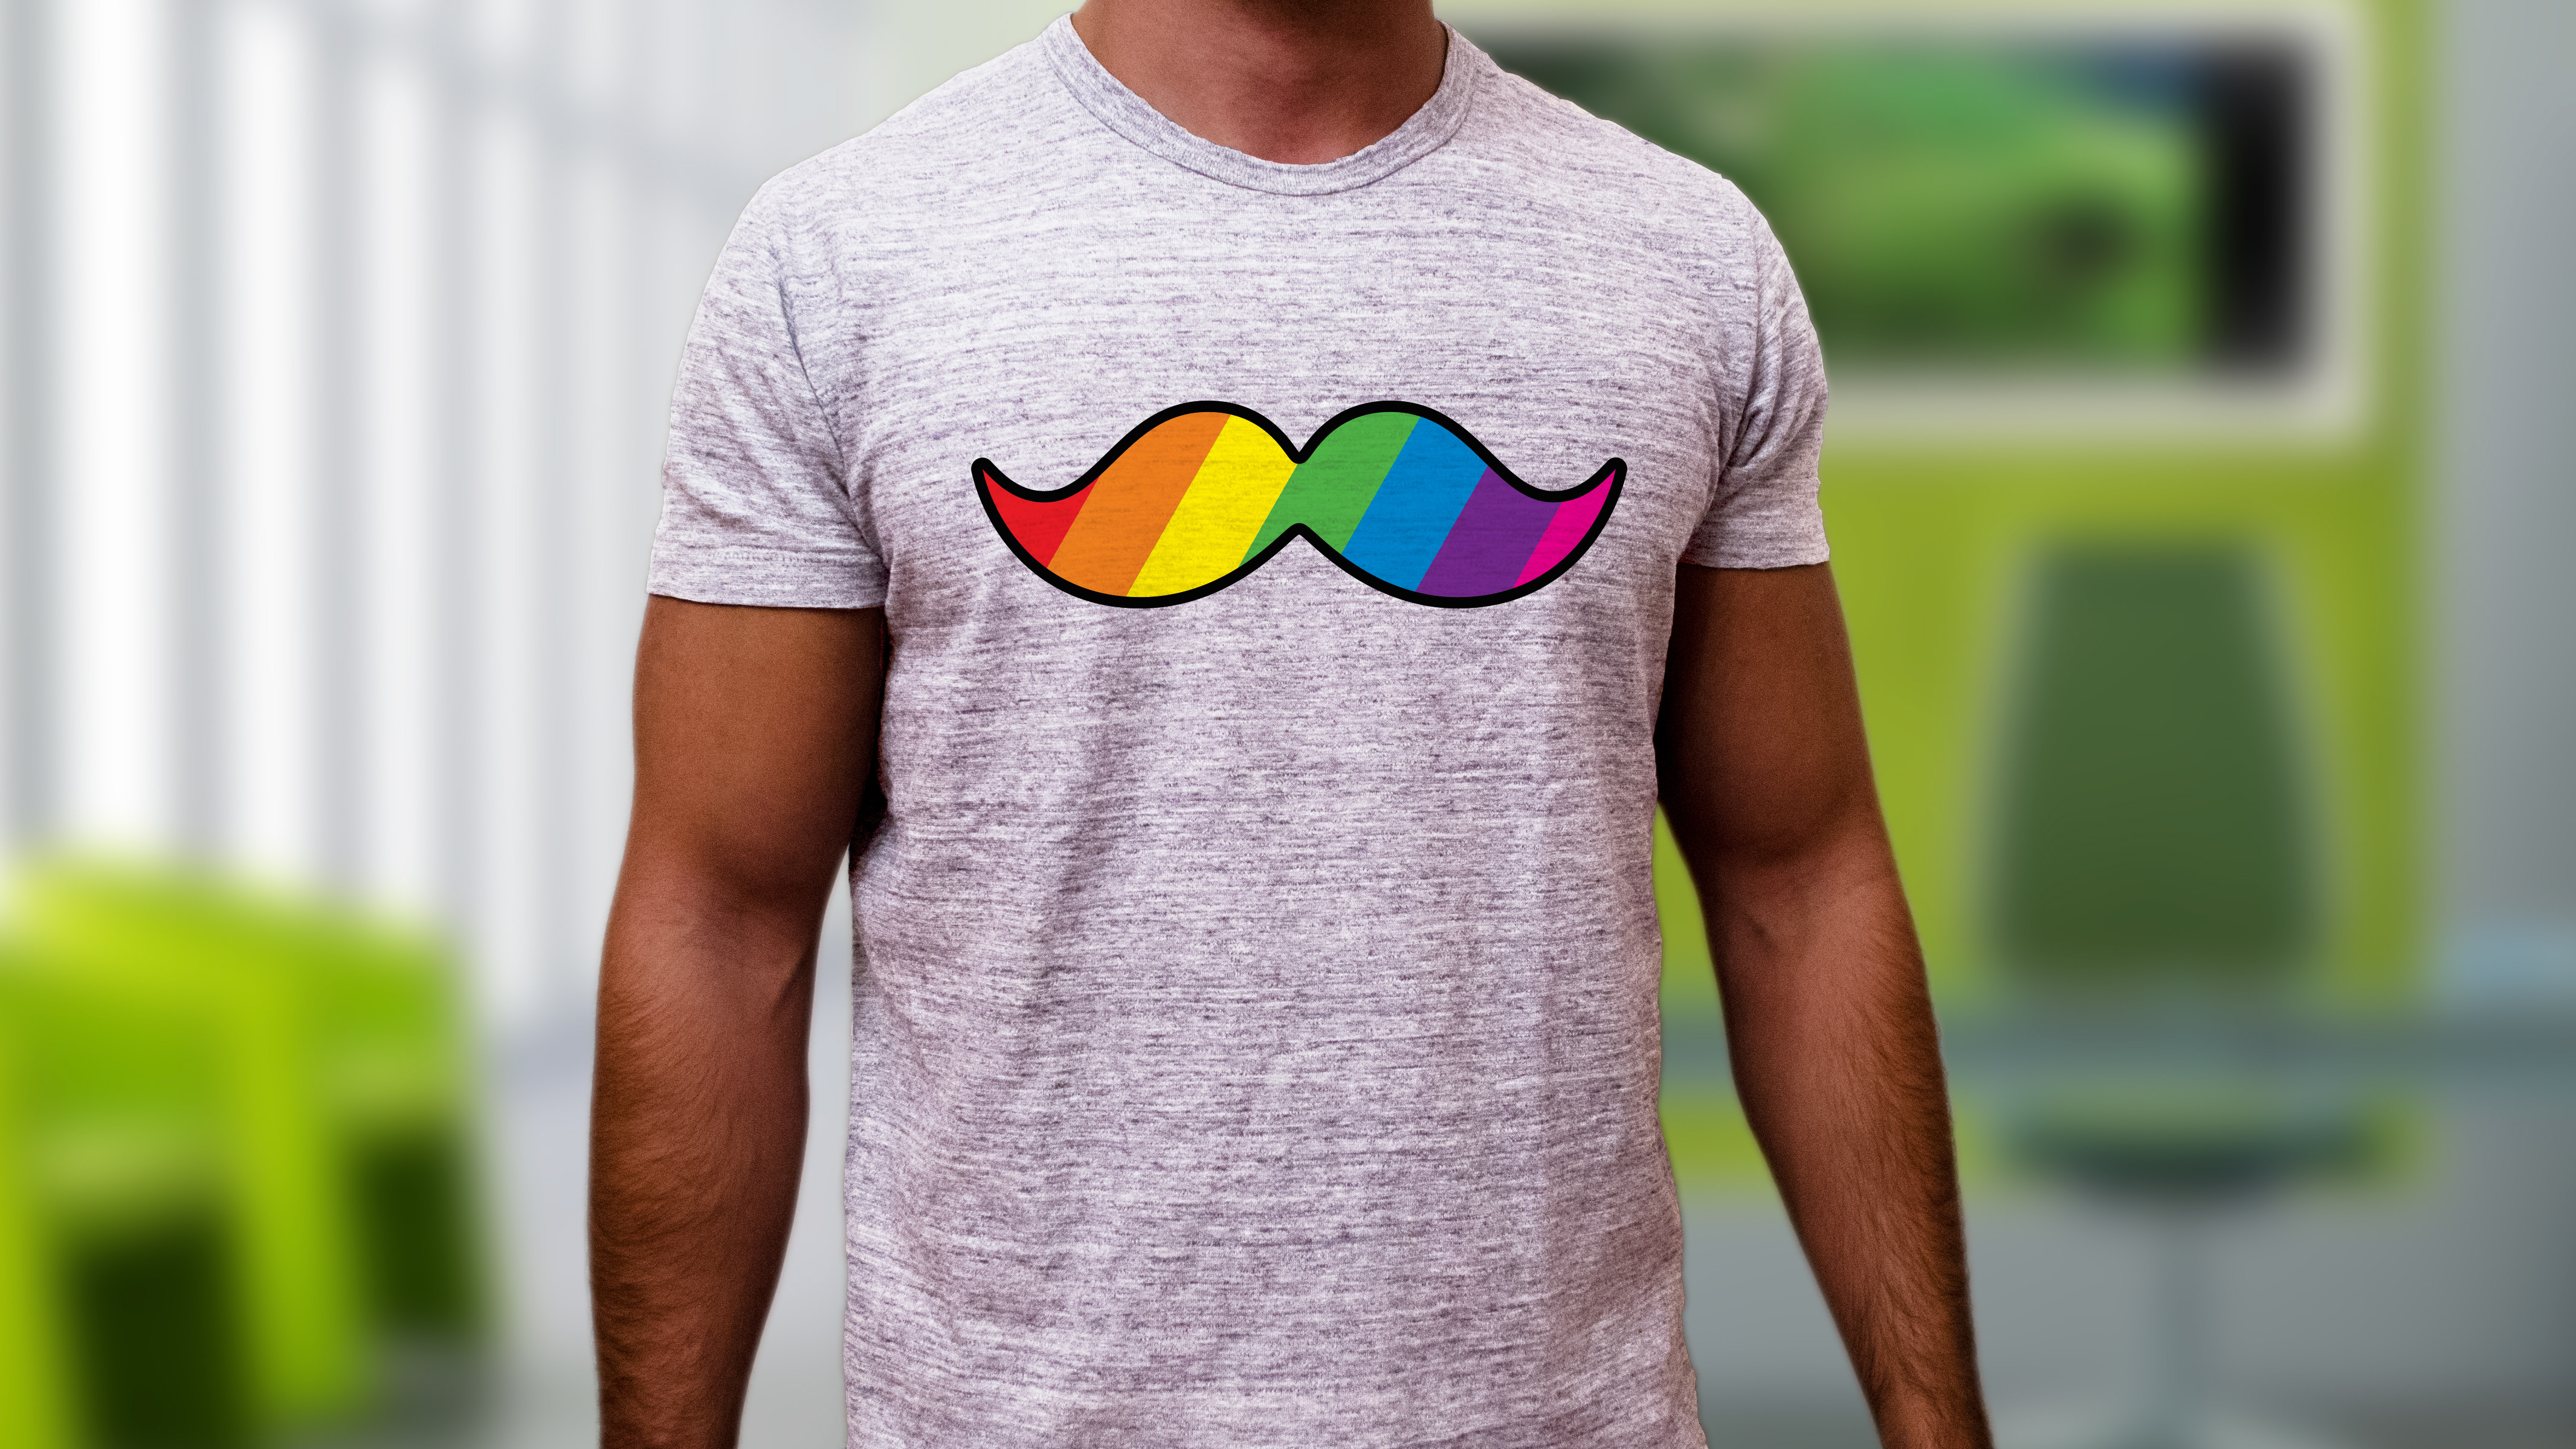 Johann's Design Portfolio - UNLV Spectrum Branding and T-shirt Designs...